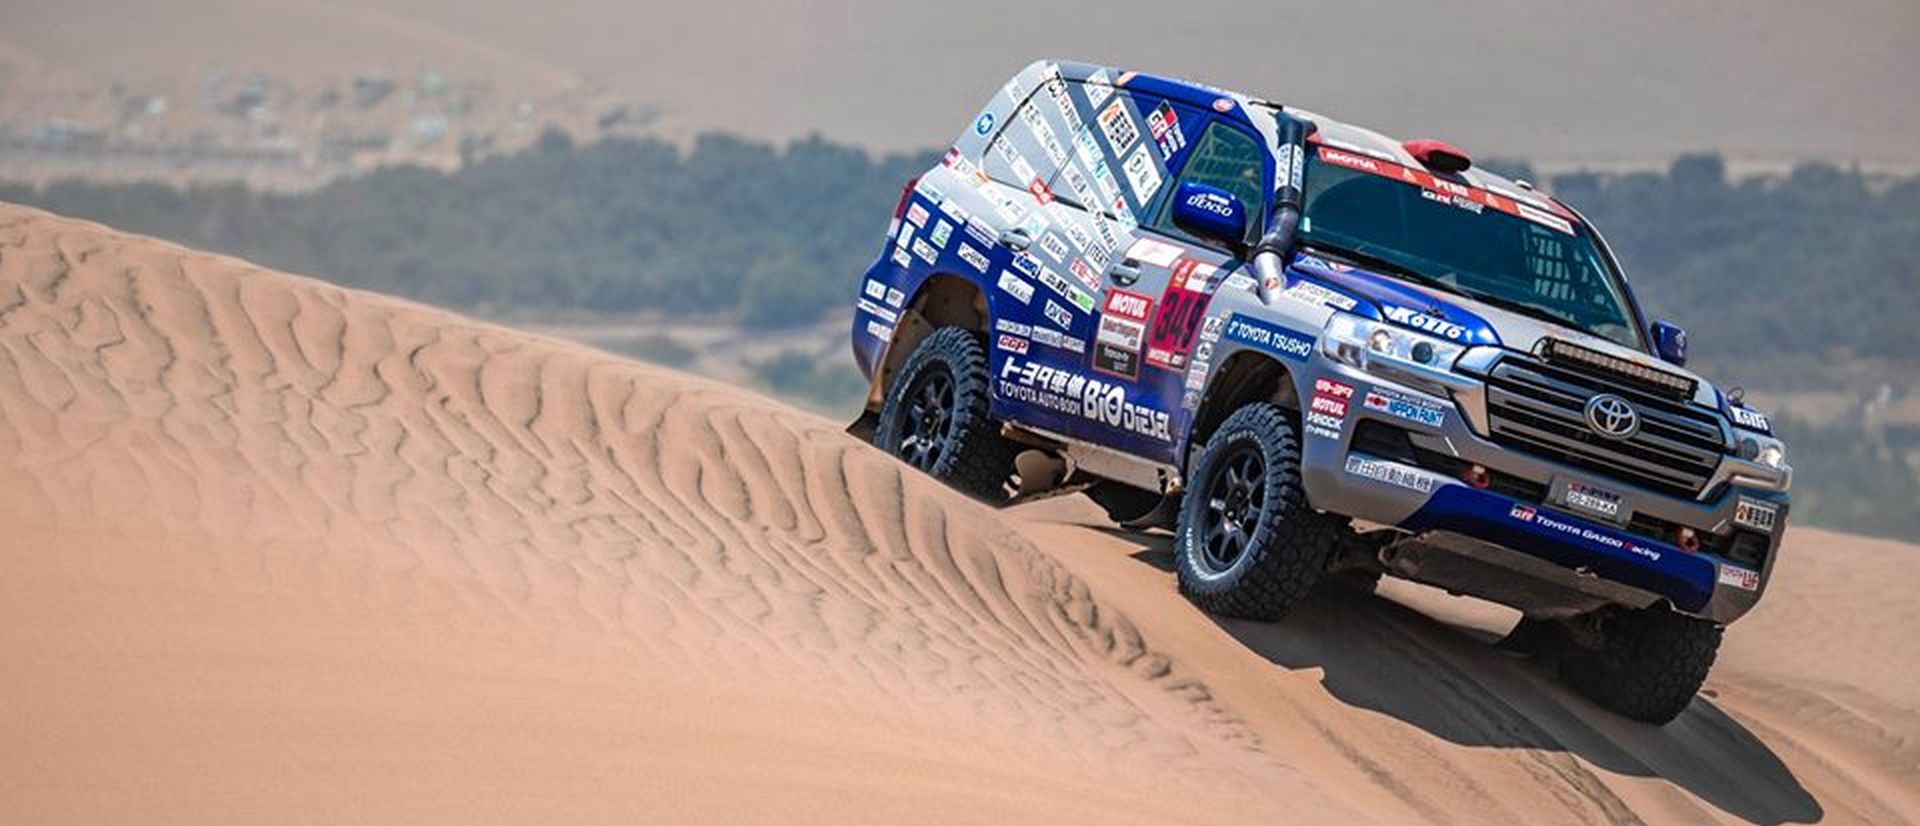 Dakar 2019 - etap VII - zwycięża Peterhansel, ale rajd nadal należy do Nassera i Toyoty